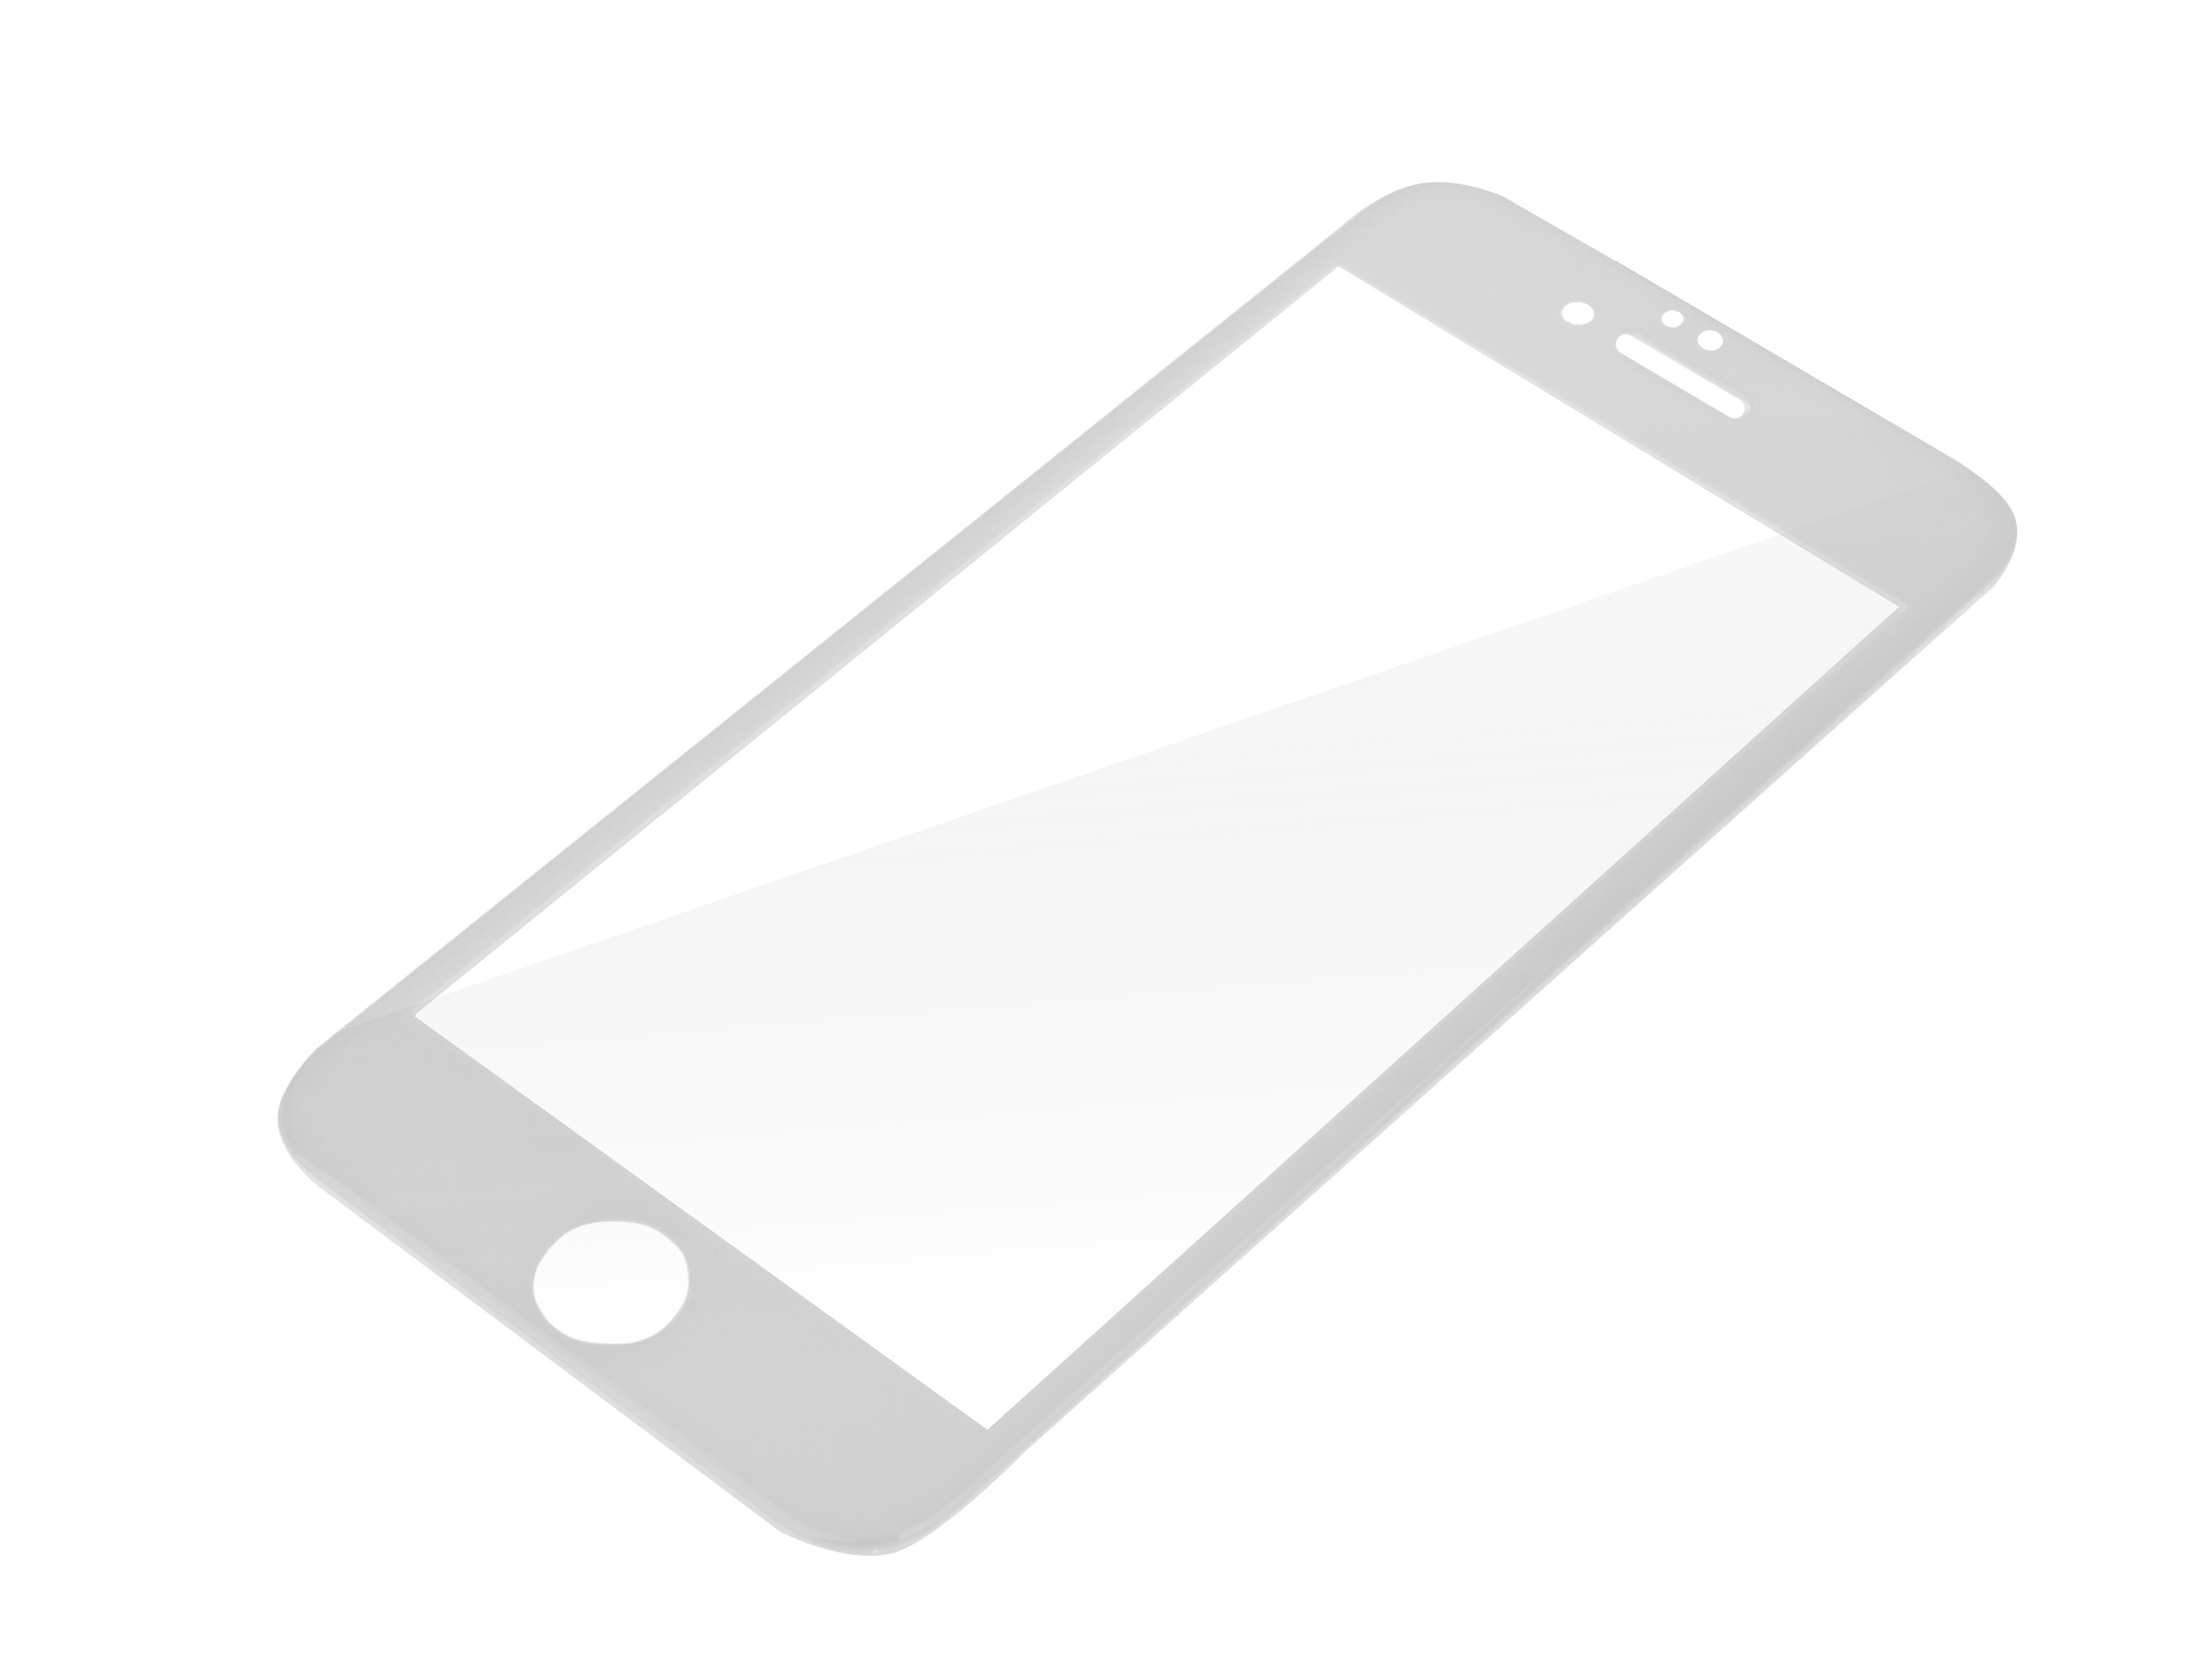 Szkło hartowane GC Clarity do telefonu Apple iPhone 6 / 6S - Biały